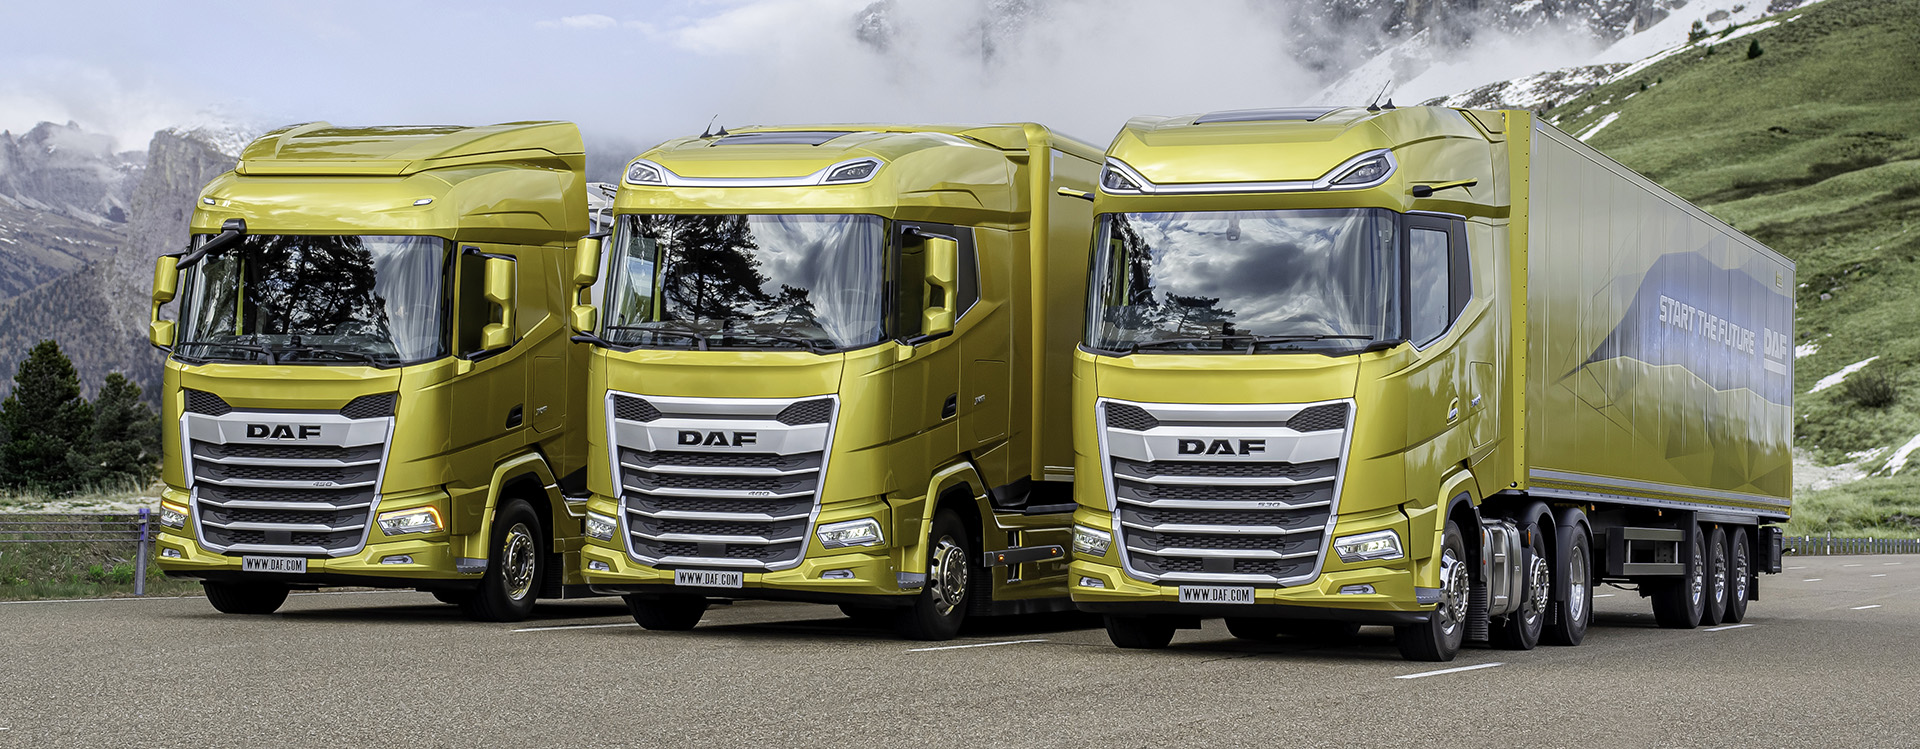 New Generation DAF trucks